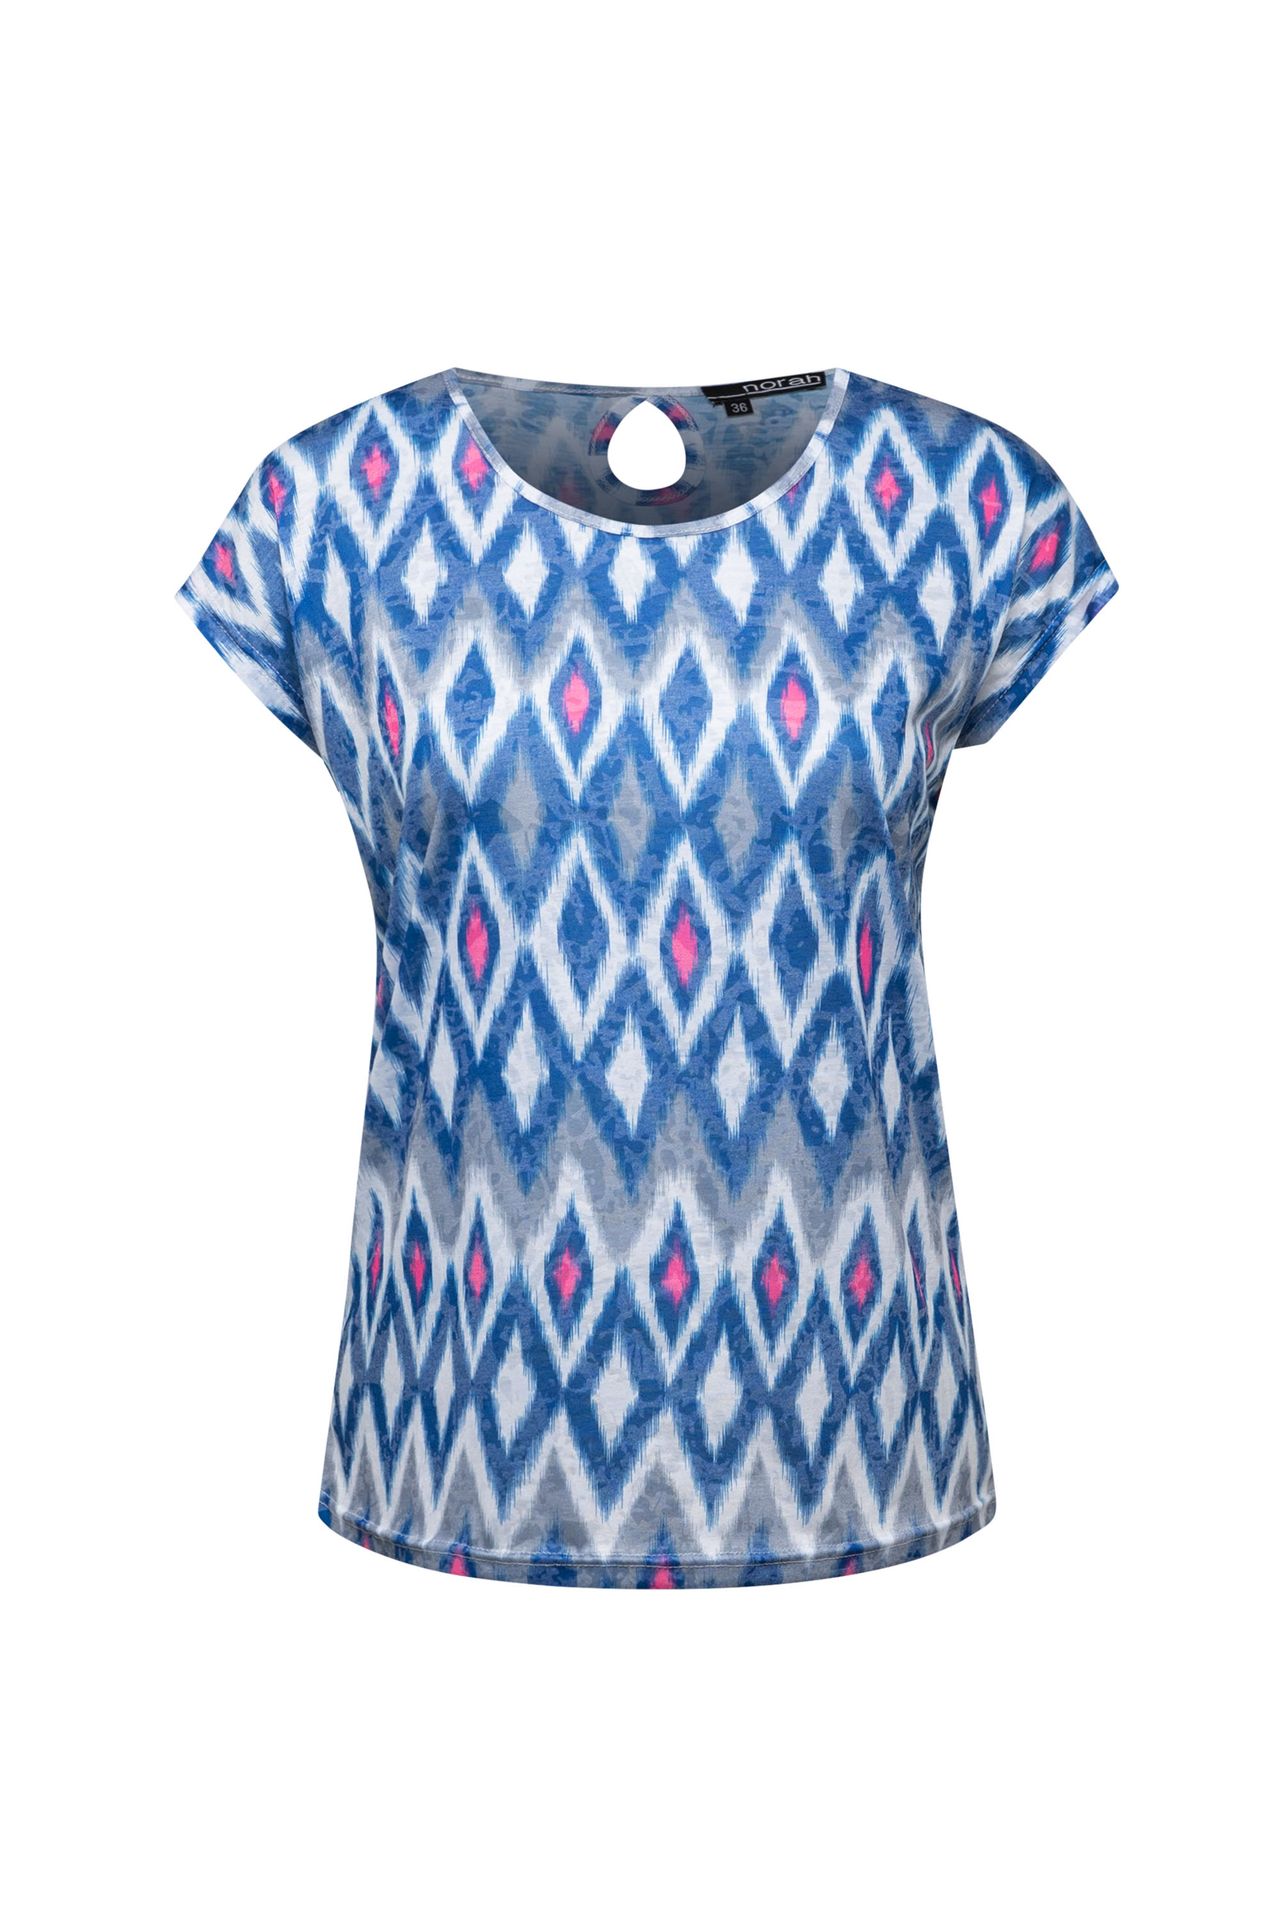 Norah Blauw shirt cobalt multicolor 213840-469